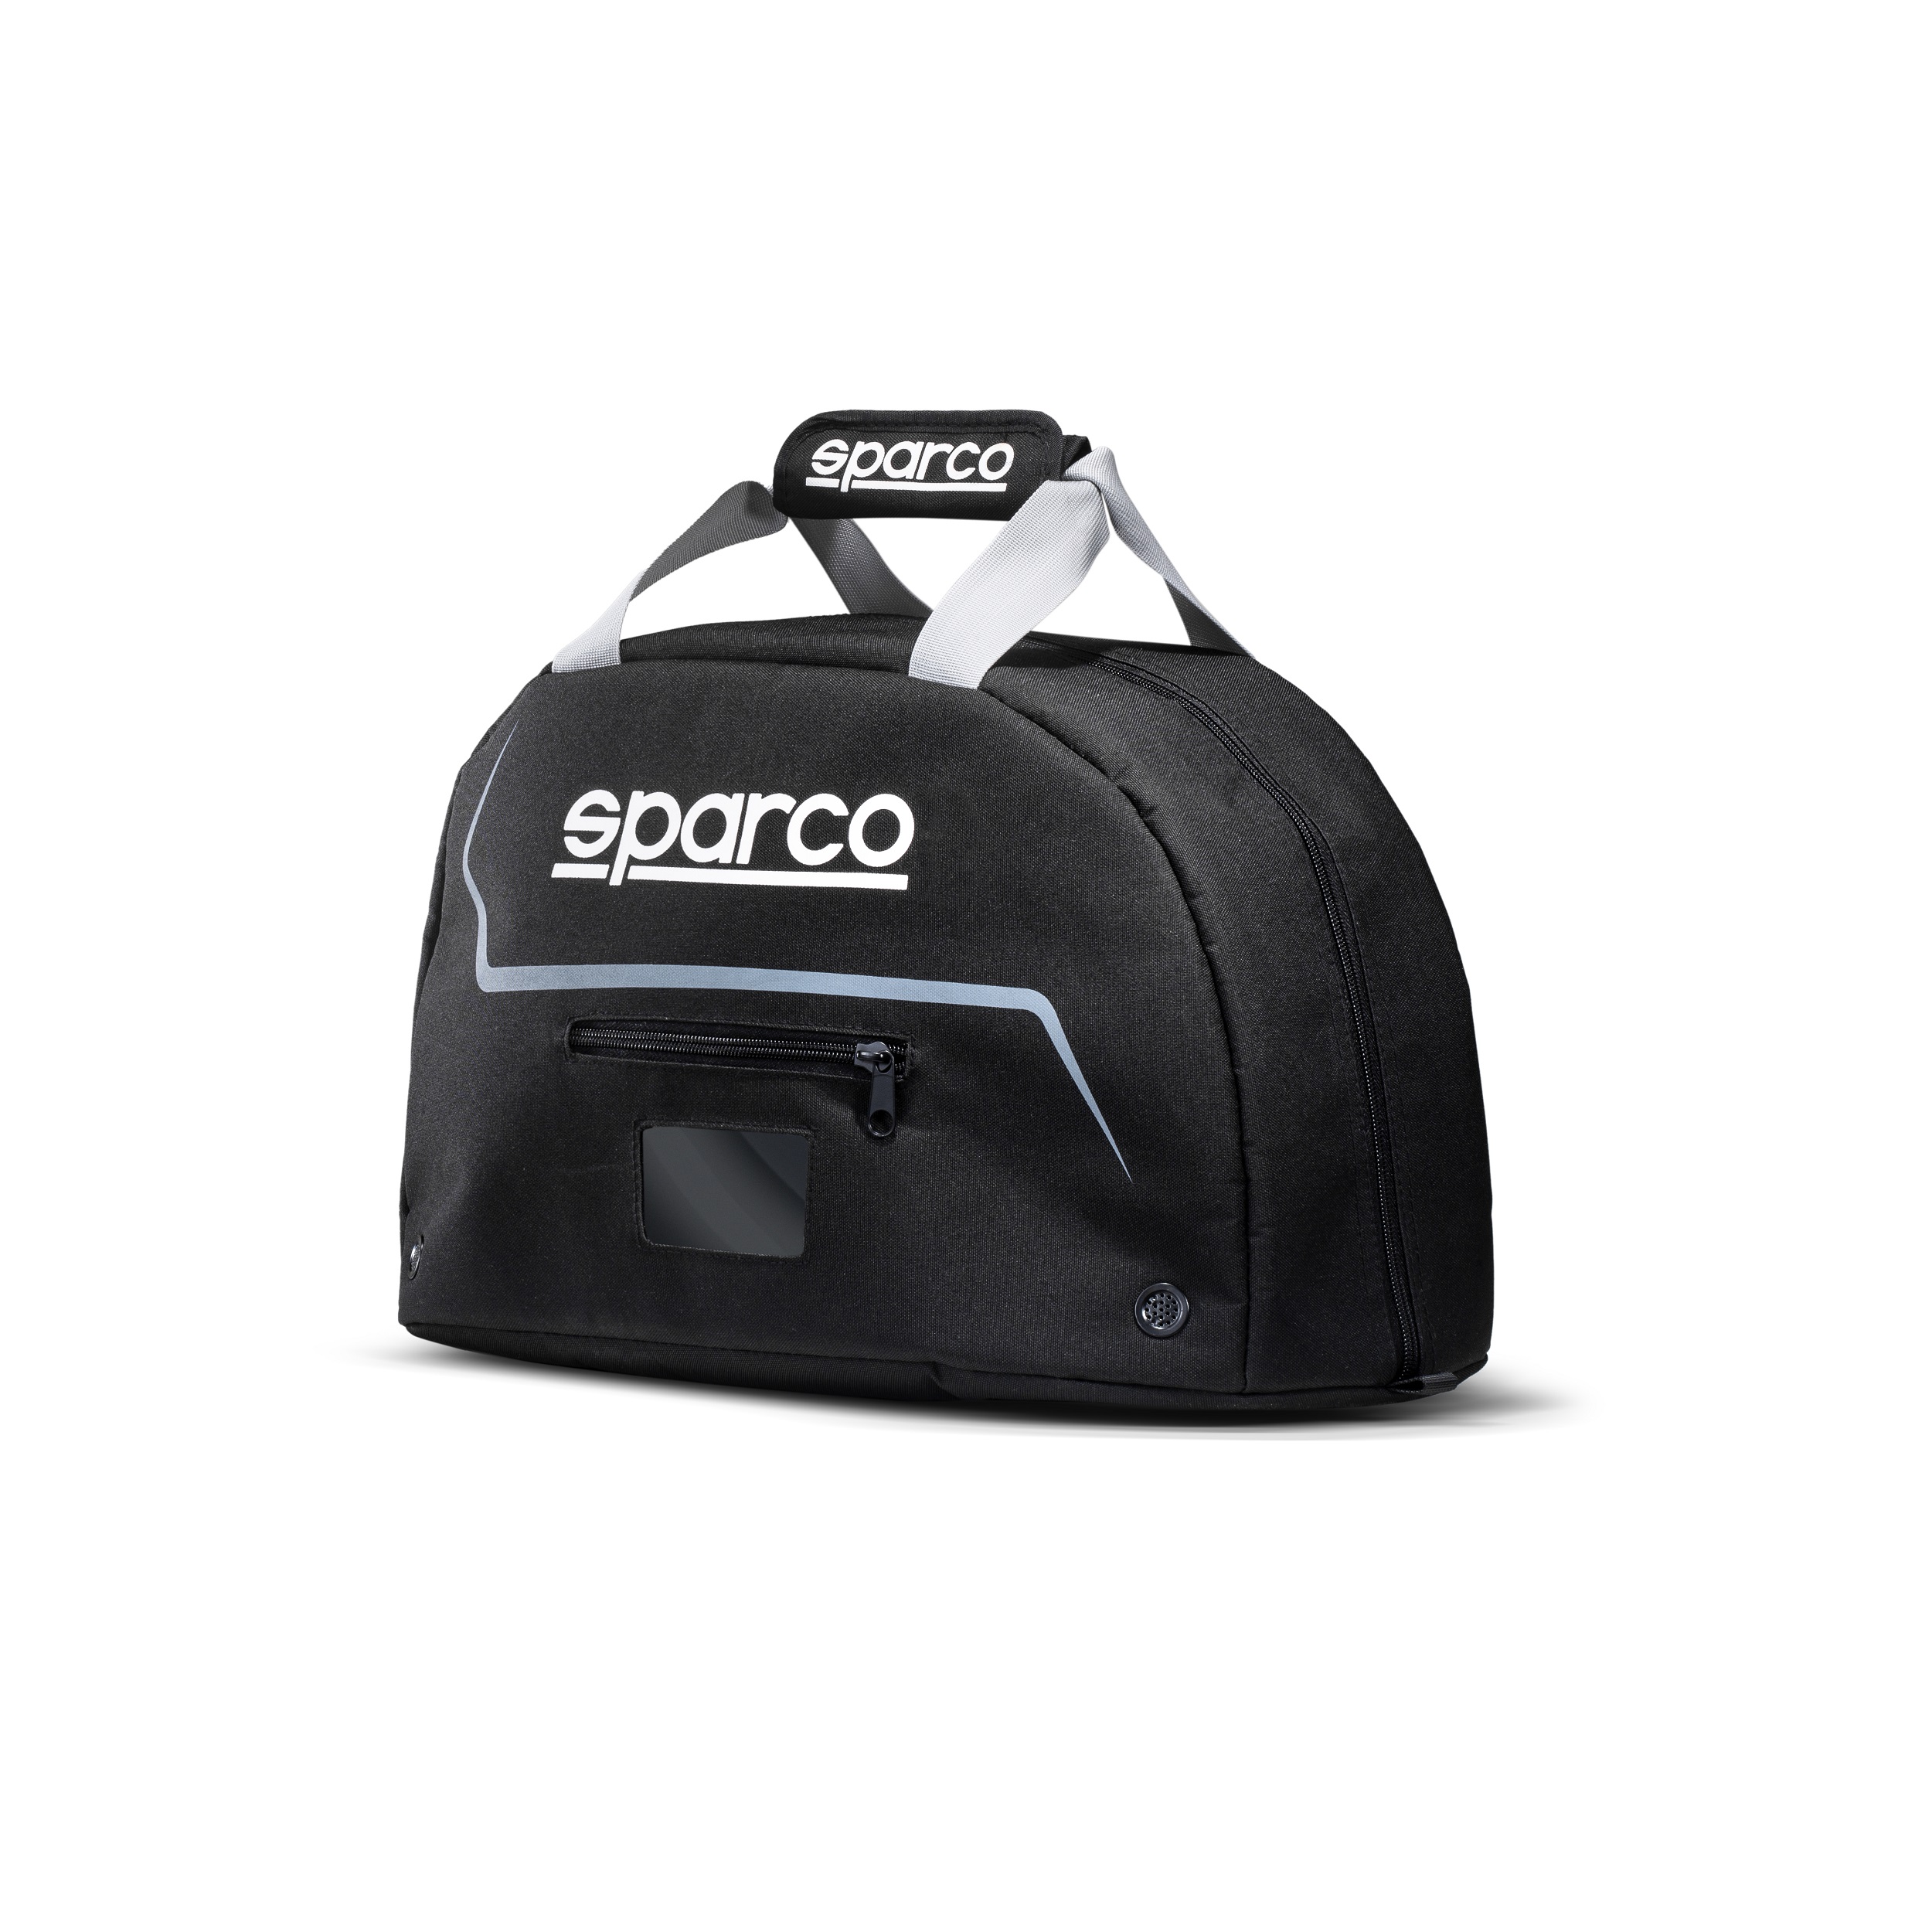 Sac porte-casque SPARCO Noir - Action karting - Equipements